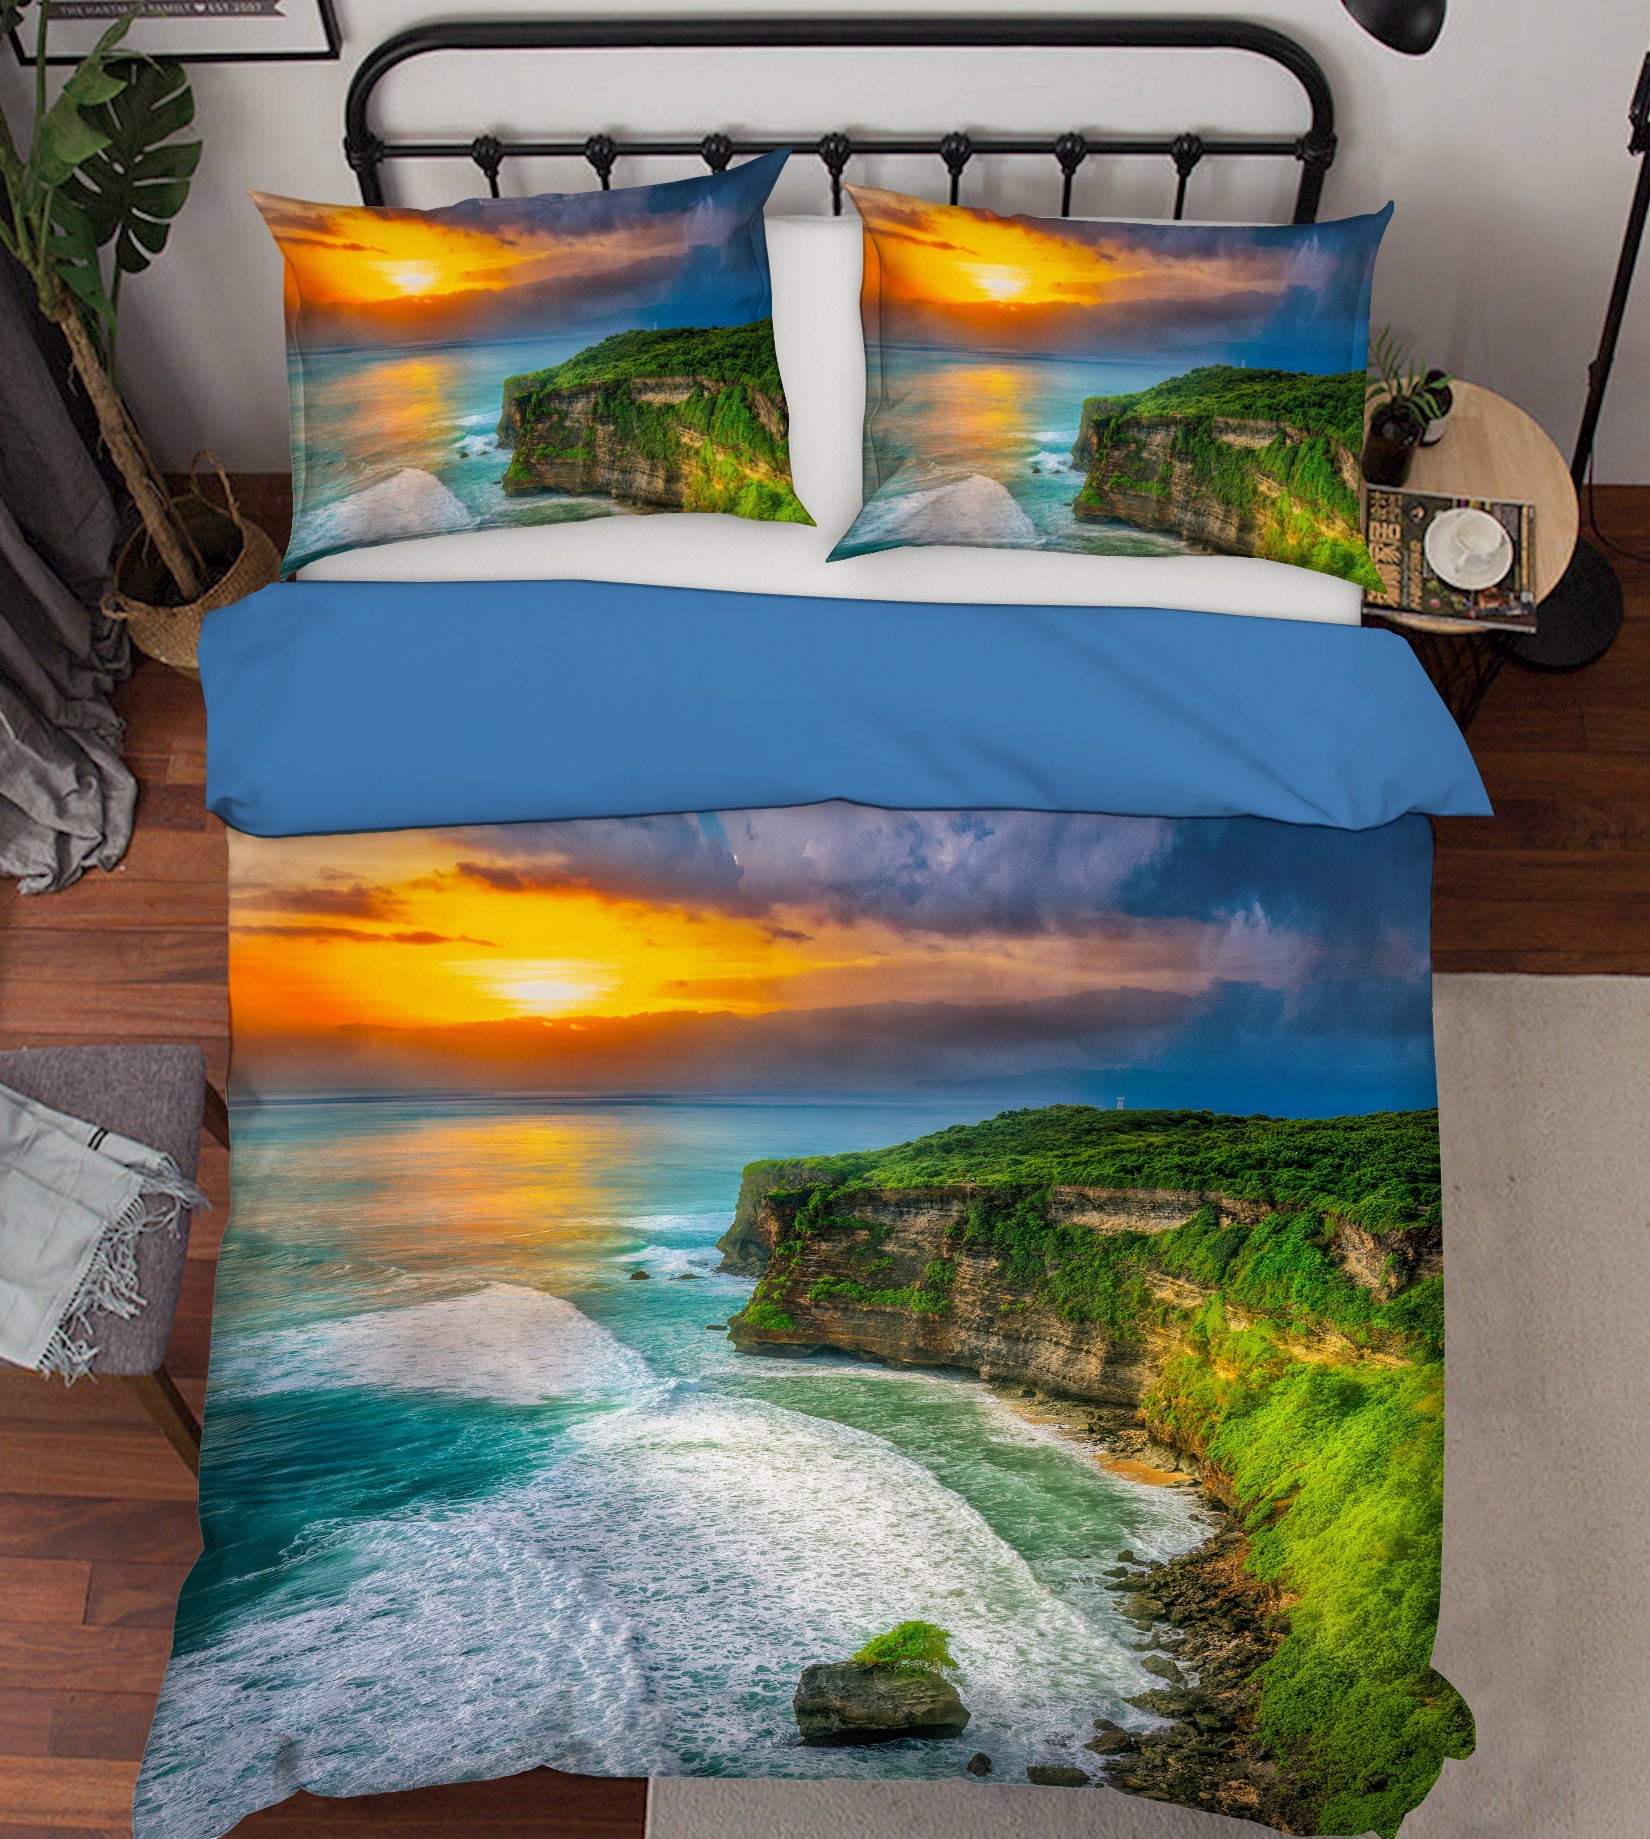 3D Uluwatu Bali 164 Marco Carmassi Bedding Bed Pillowcases Quilt